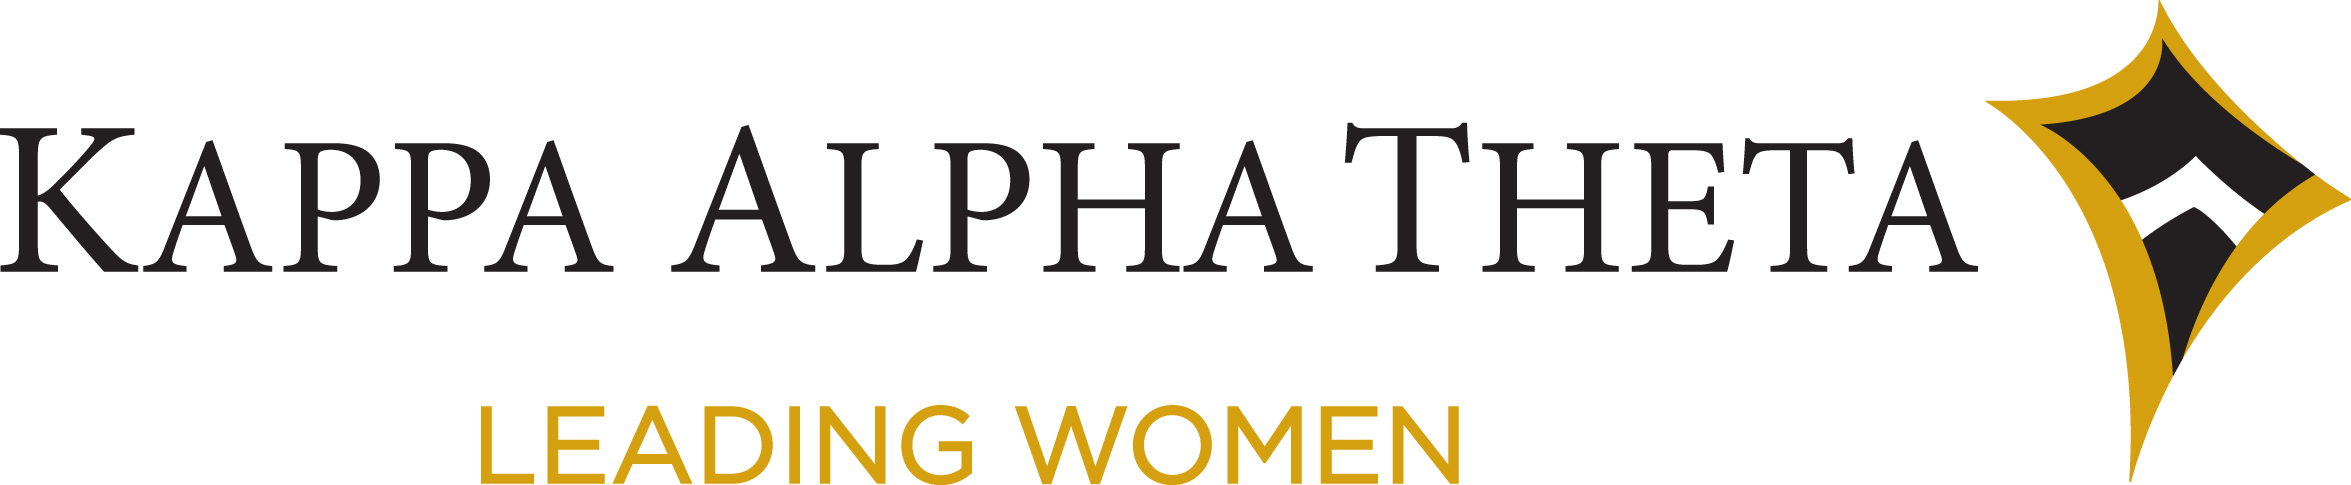 Kappa Alpha Theta Announces New Brand Identity